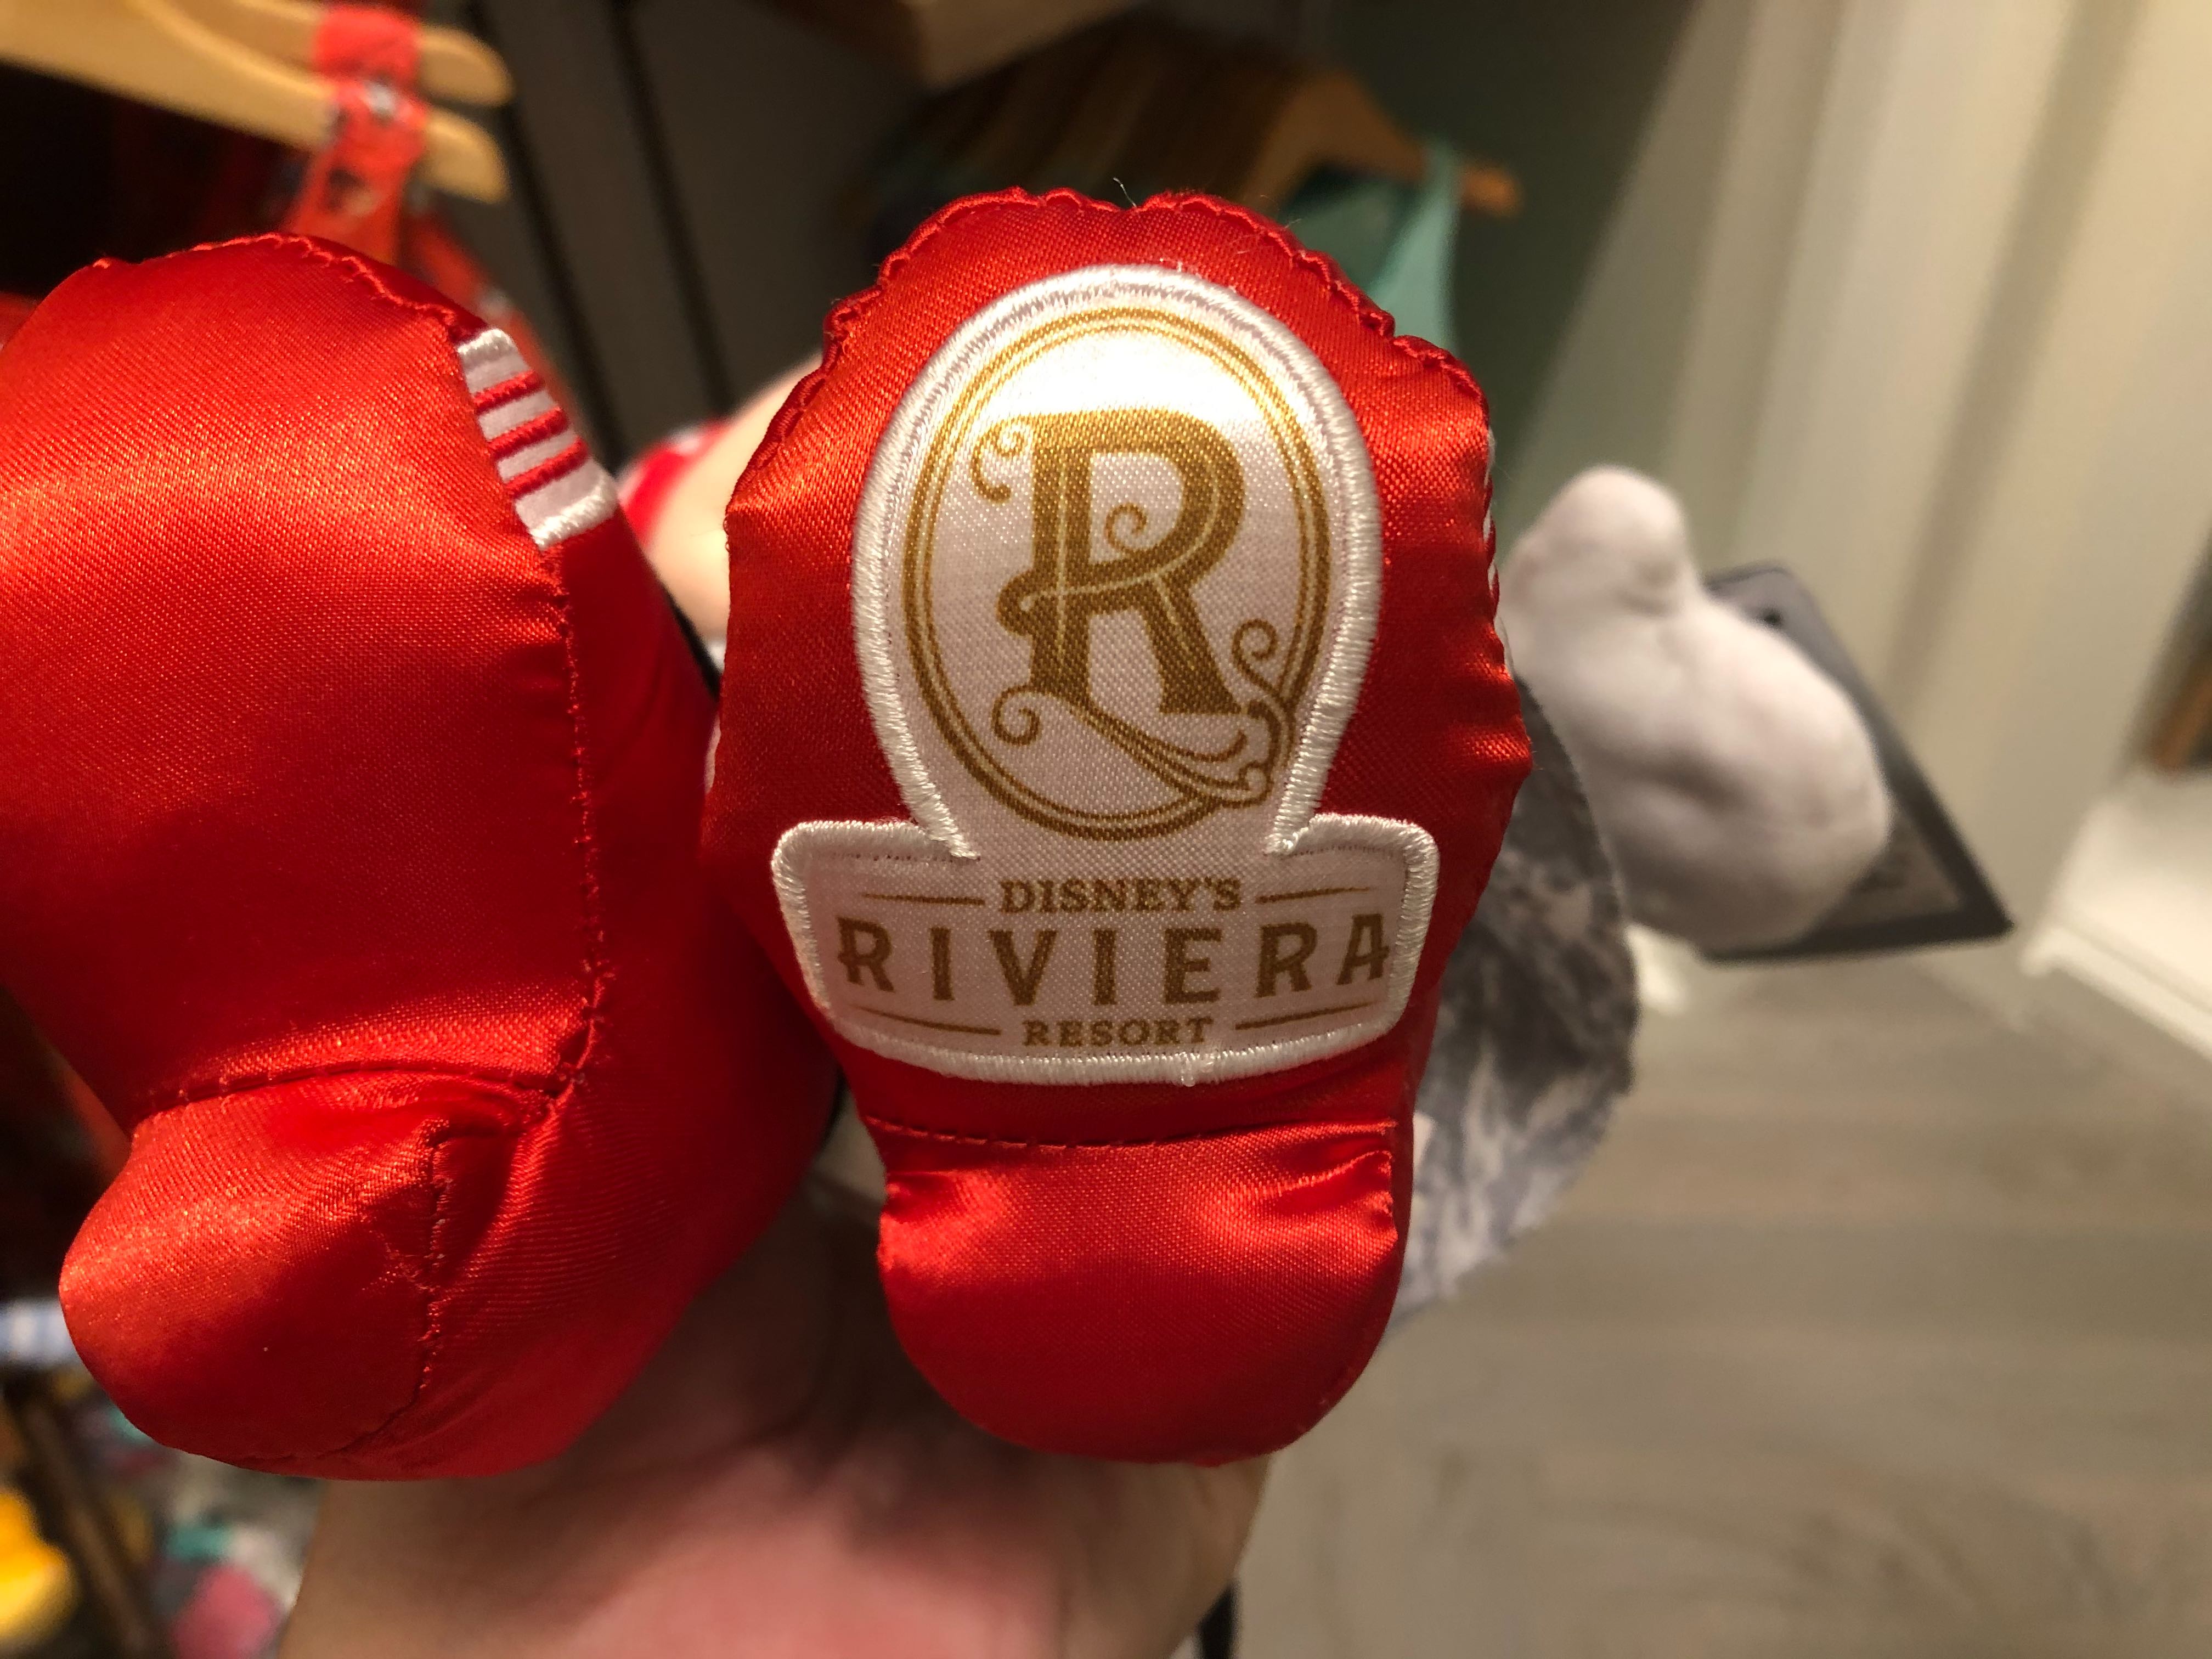 Riviera Resort Plush Characters Minnie - $21.99 Each